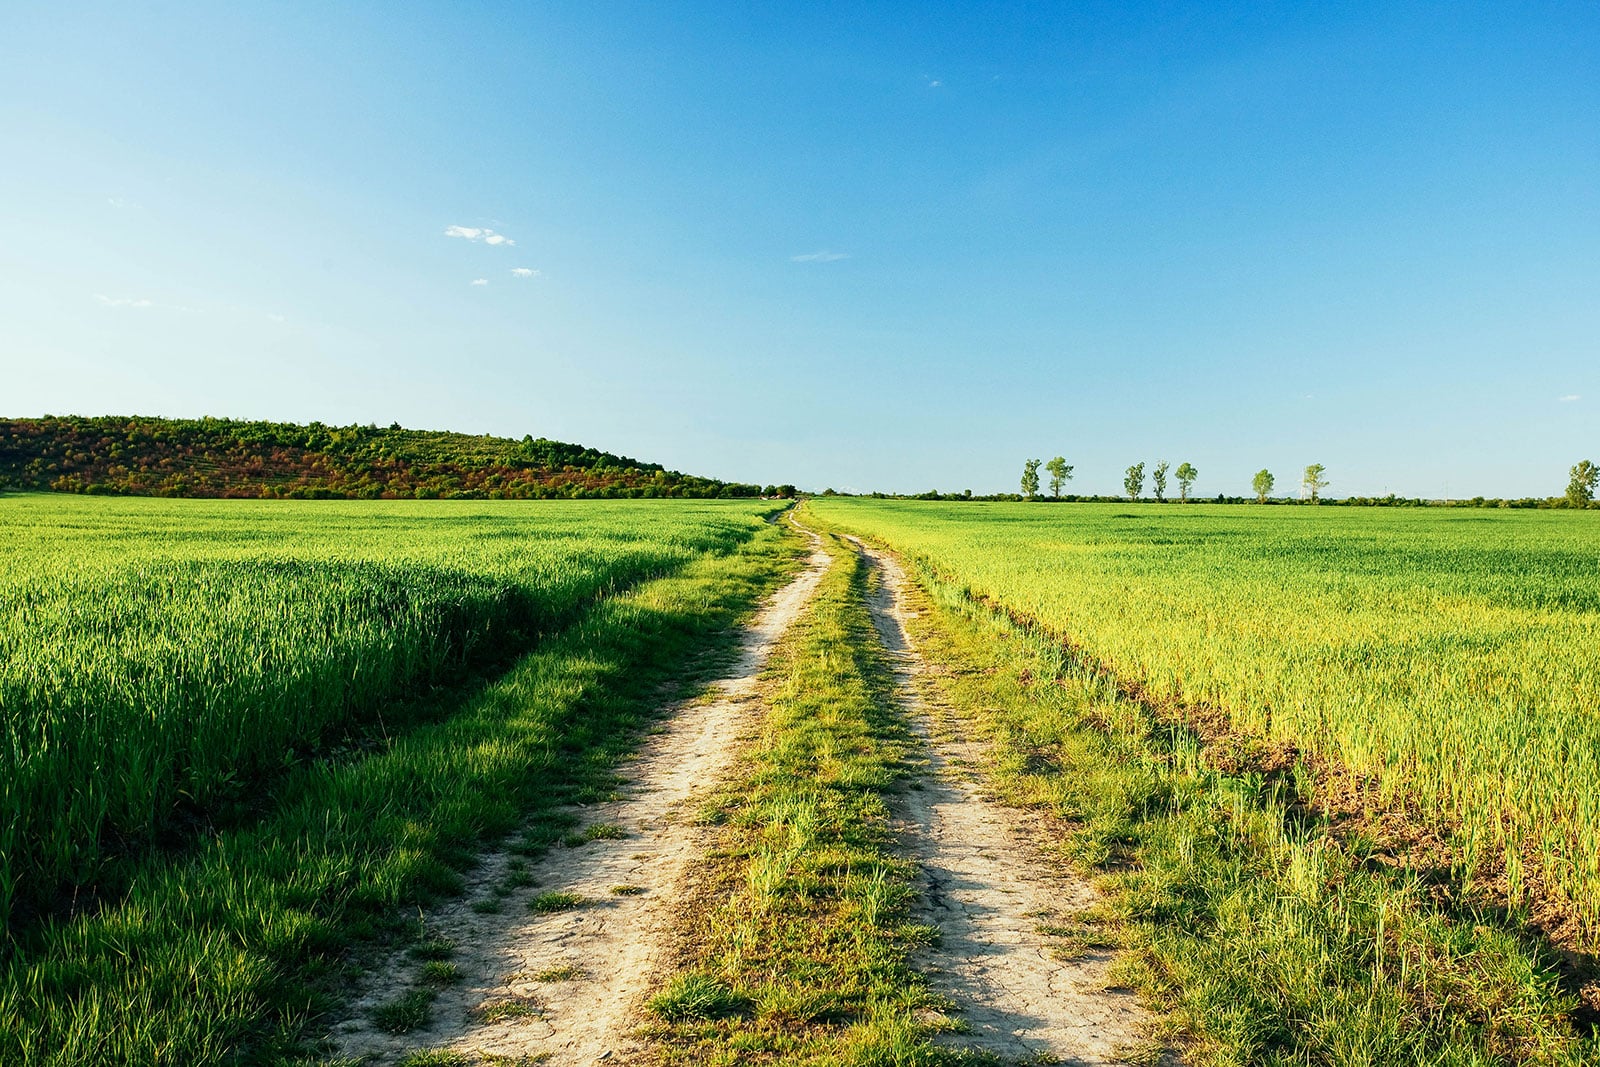 A single-lane country road through grass